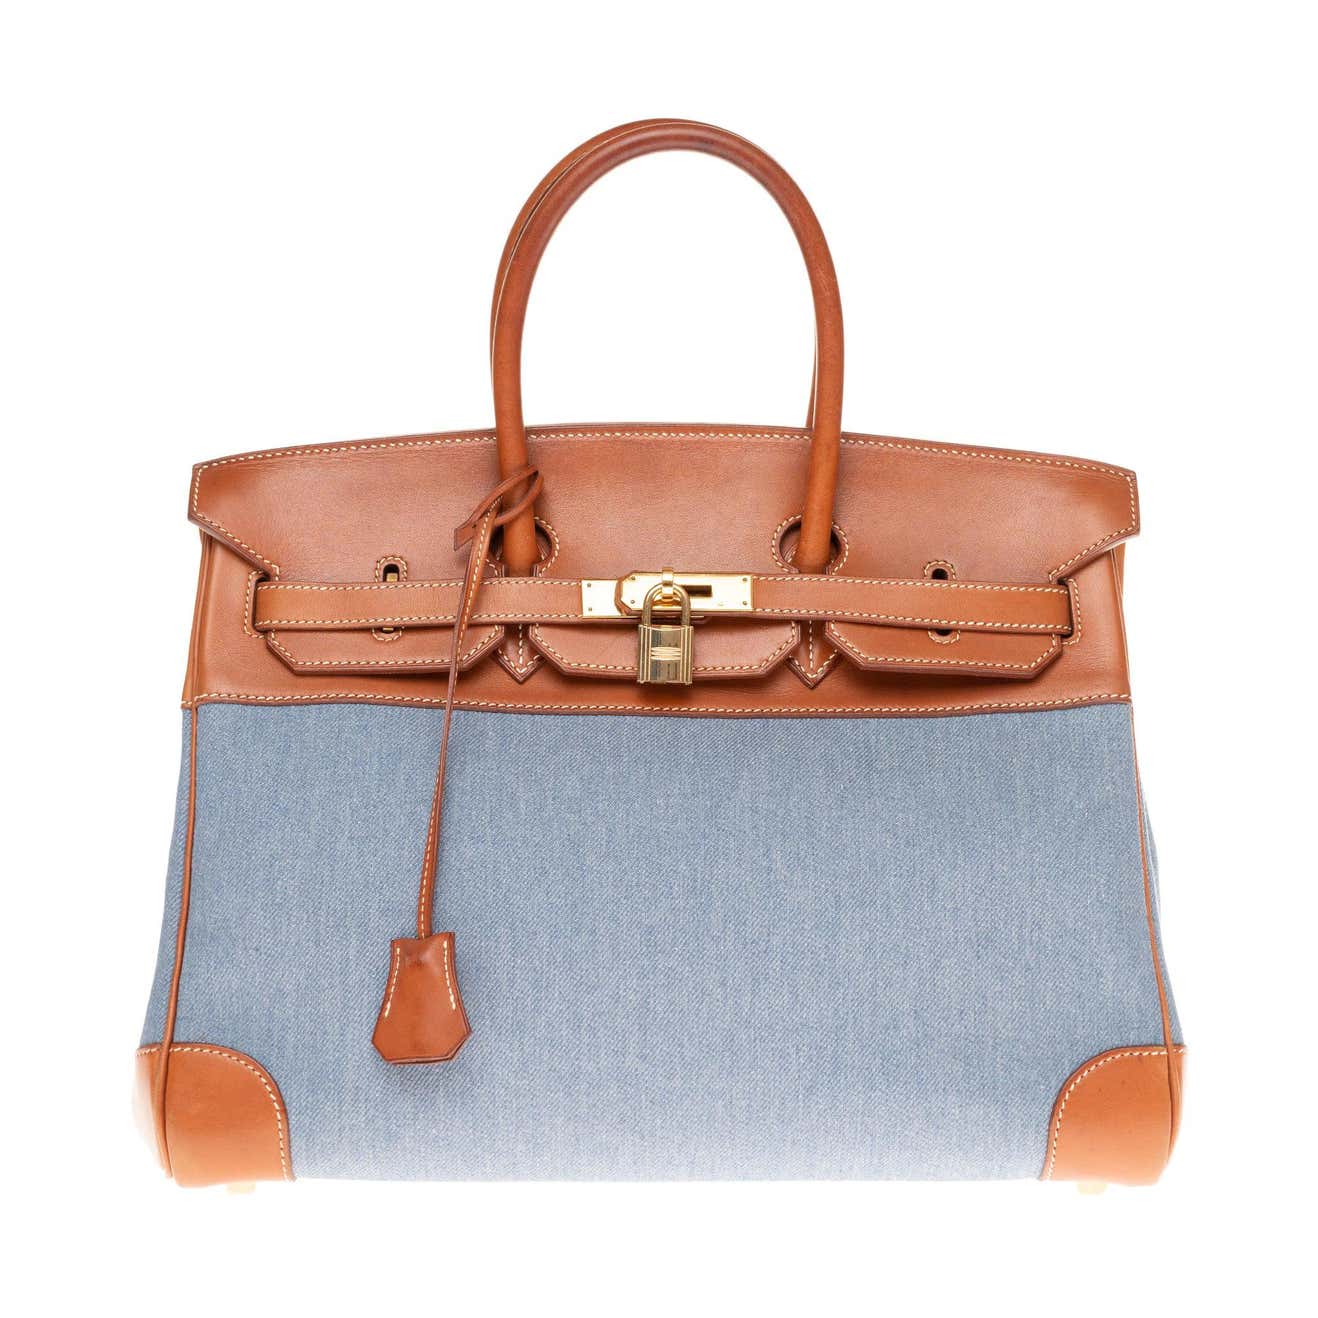 Hermès Birkin 35 handbag in blue denim and brown barenia leather, GHW ...